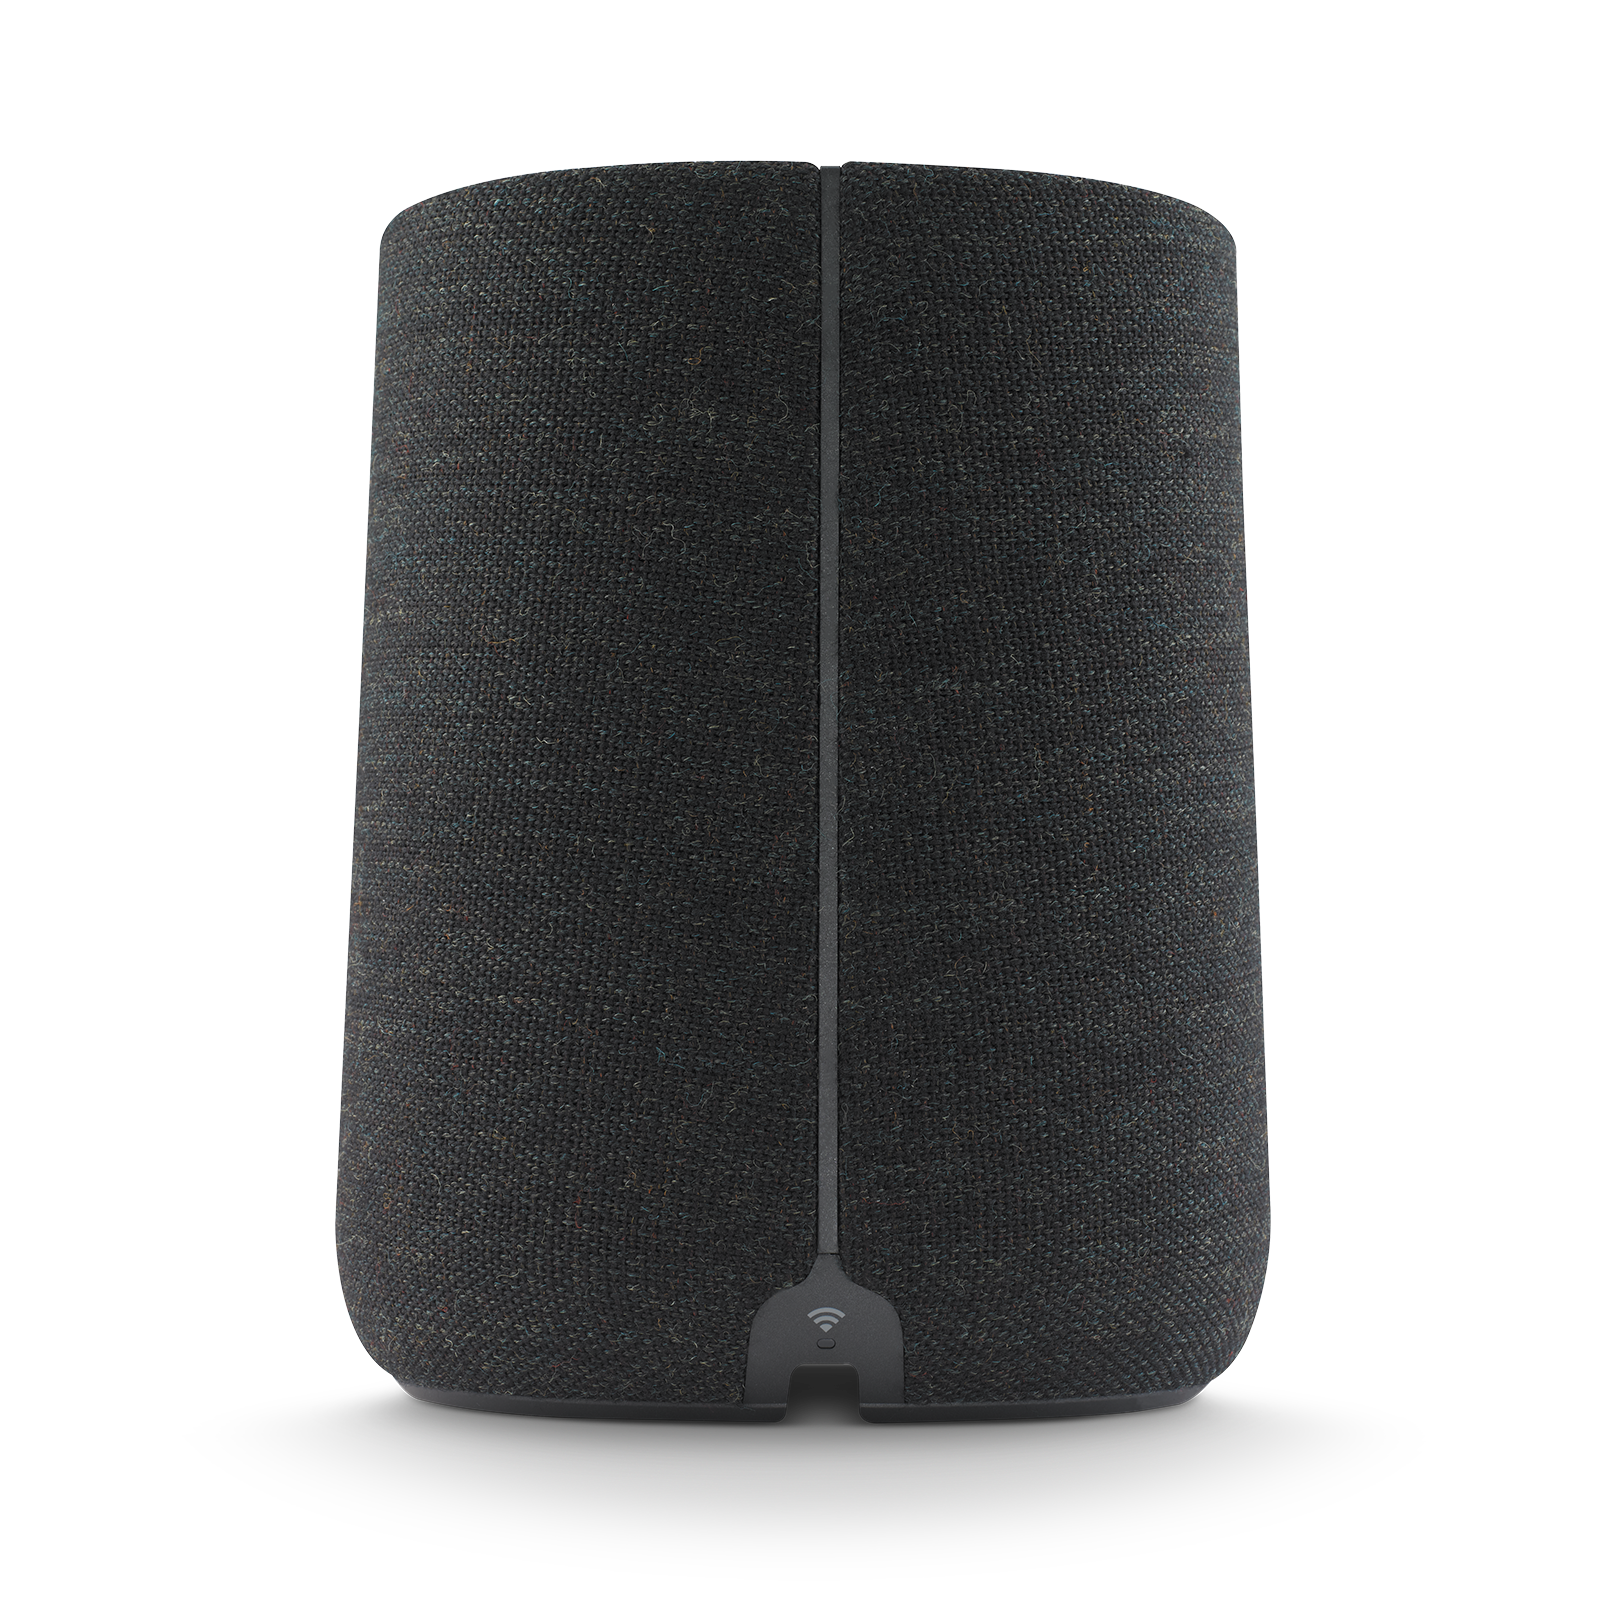 Harman Kardon Citation One MKII - Black - All-in-one smart speaker with room-filling sound - Back